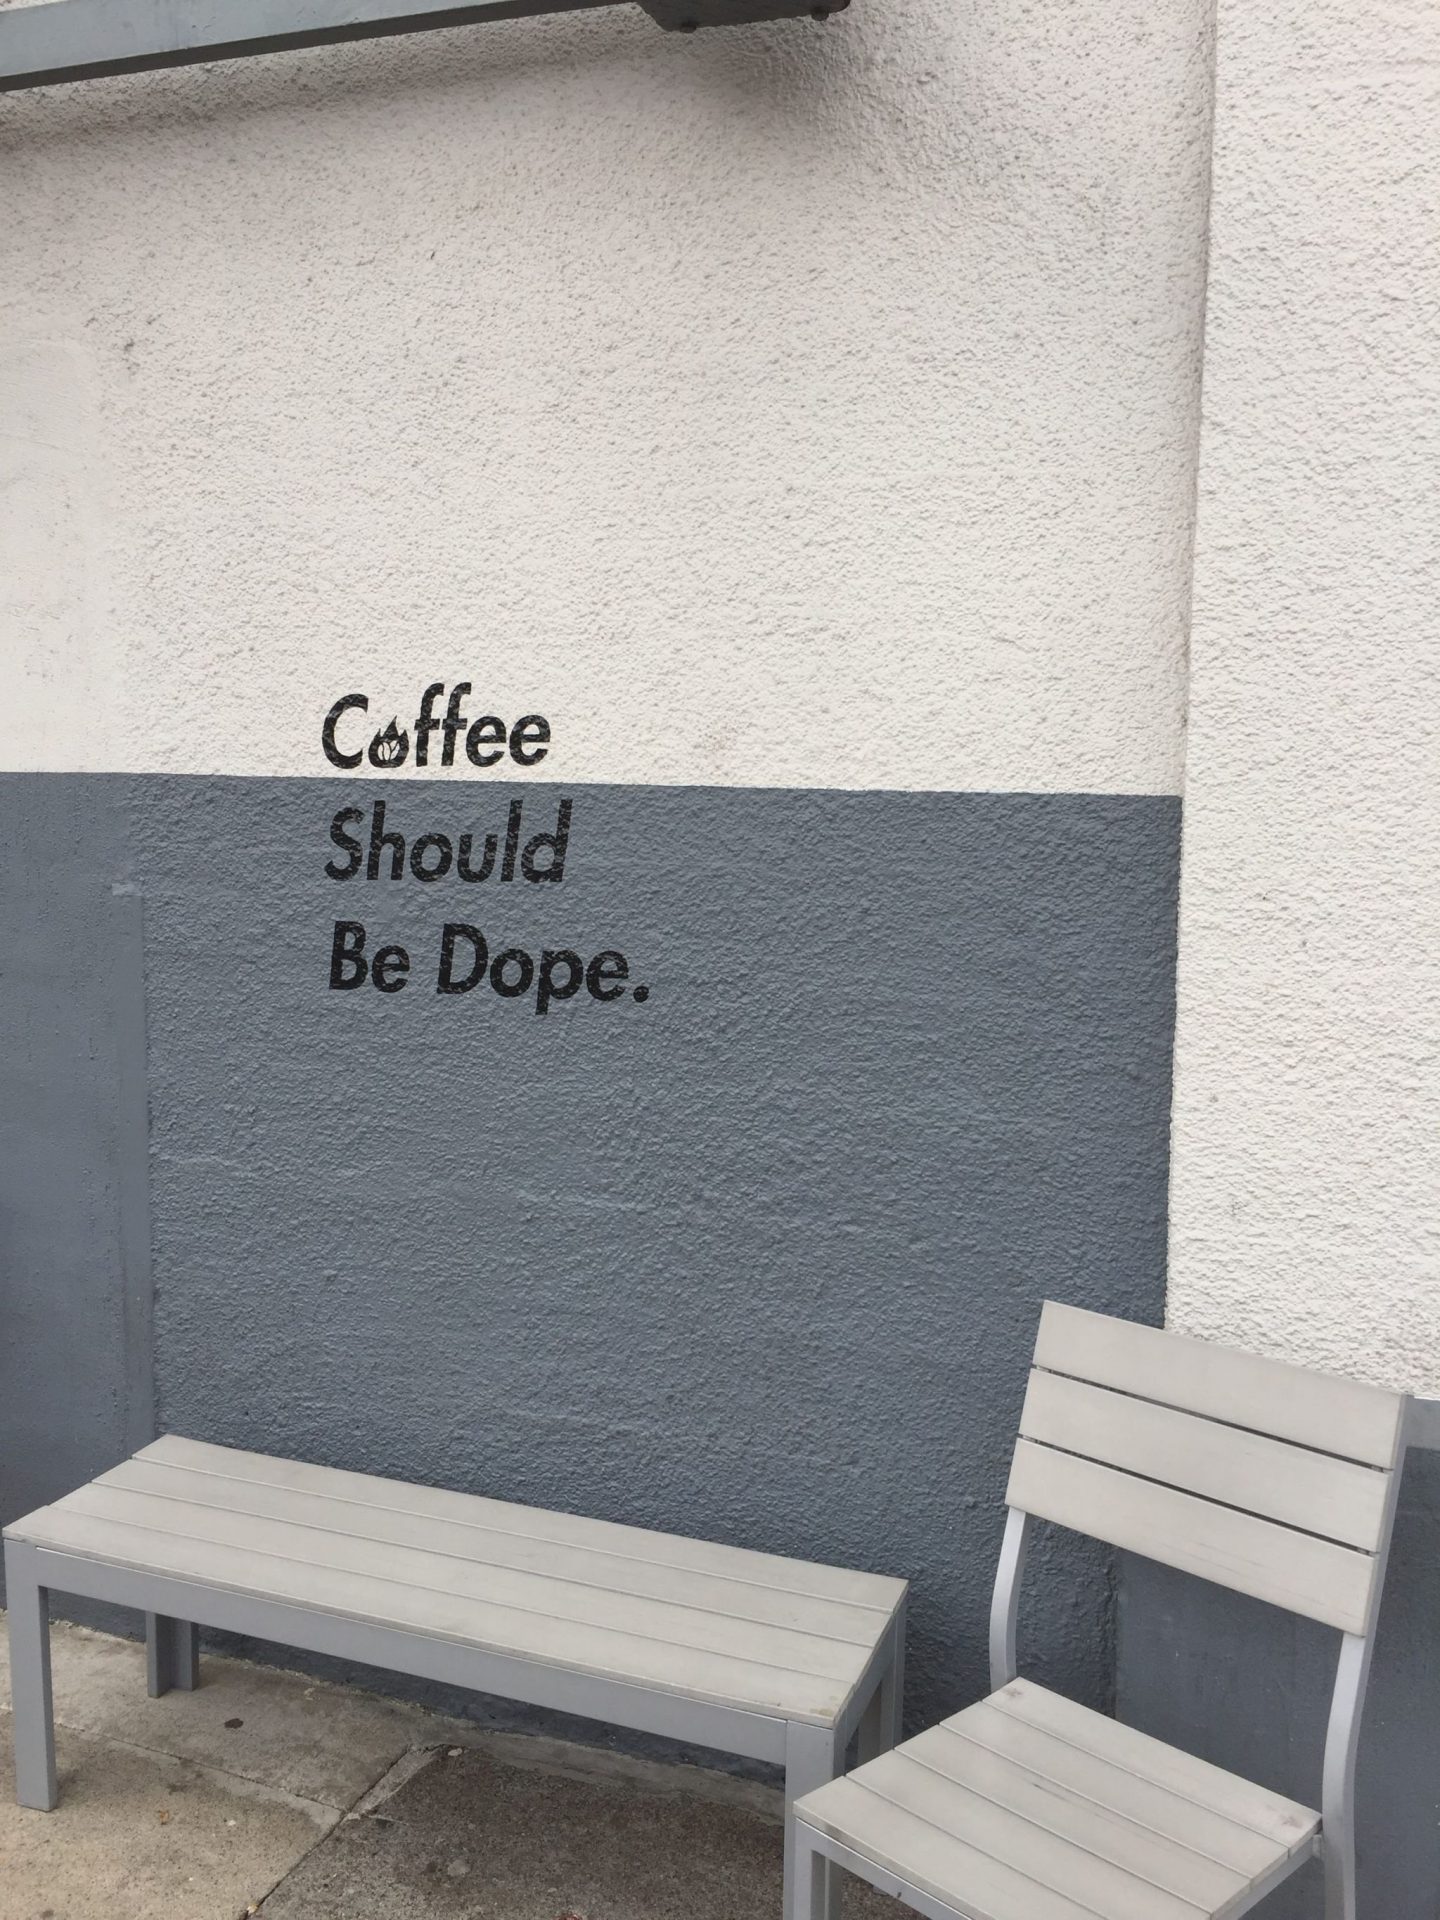 Coffee should be dope mural, Portland